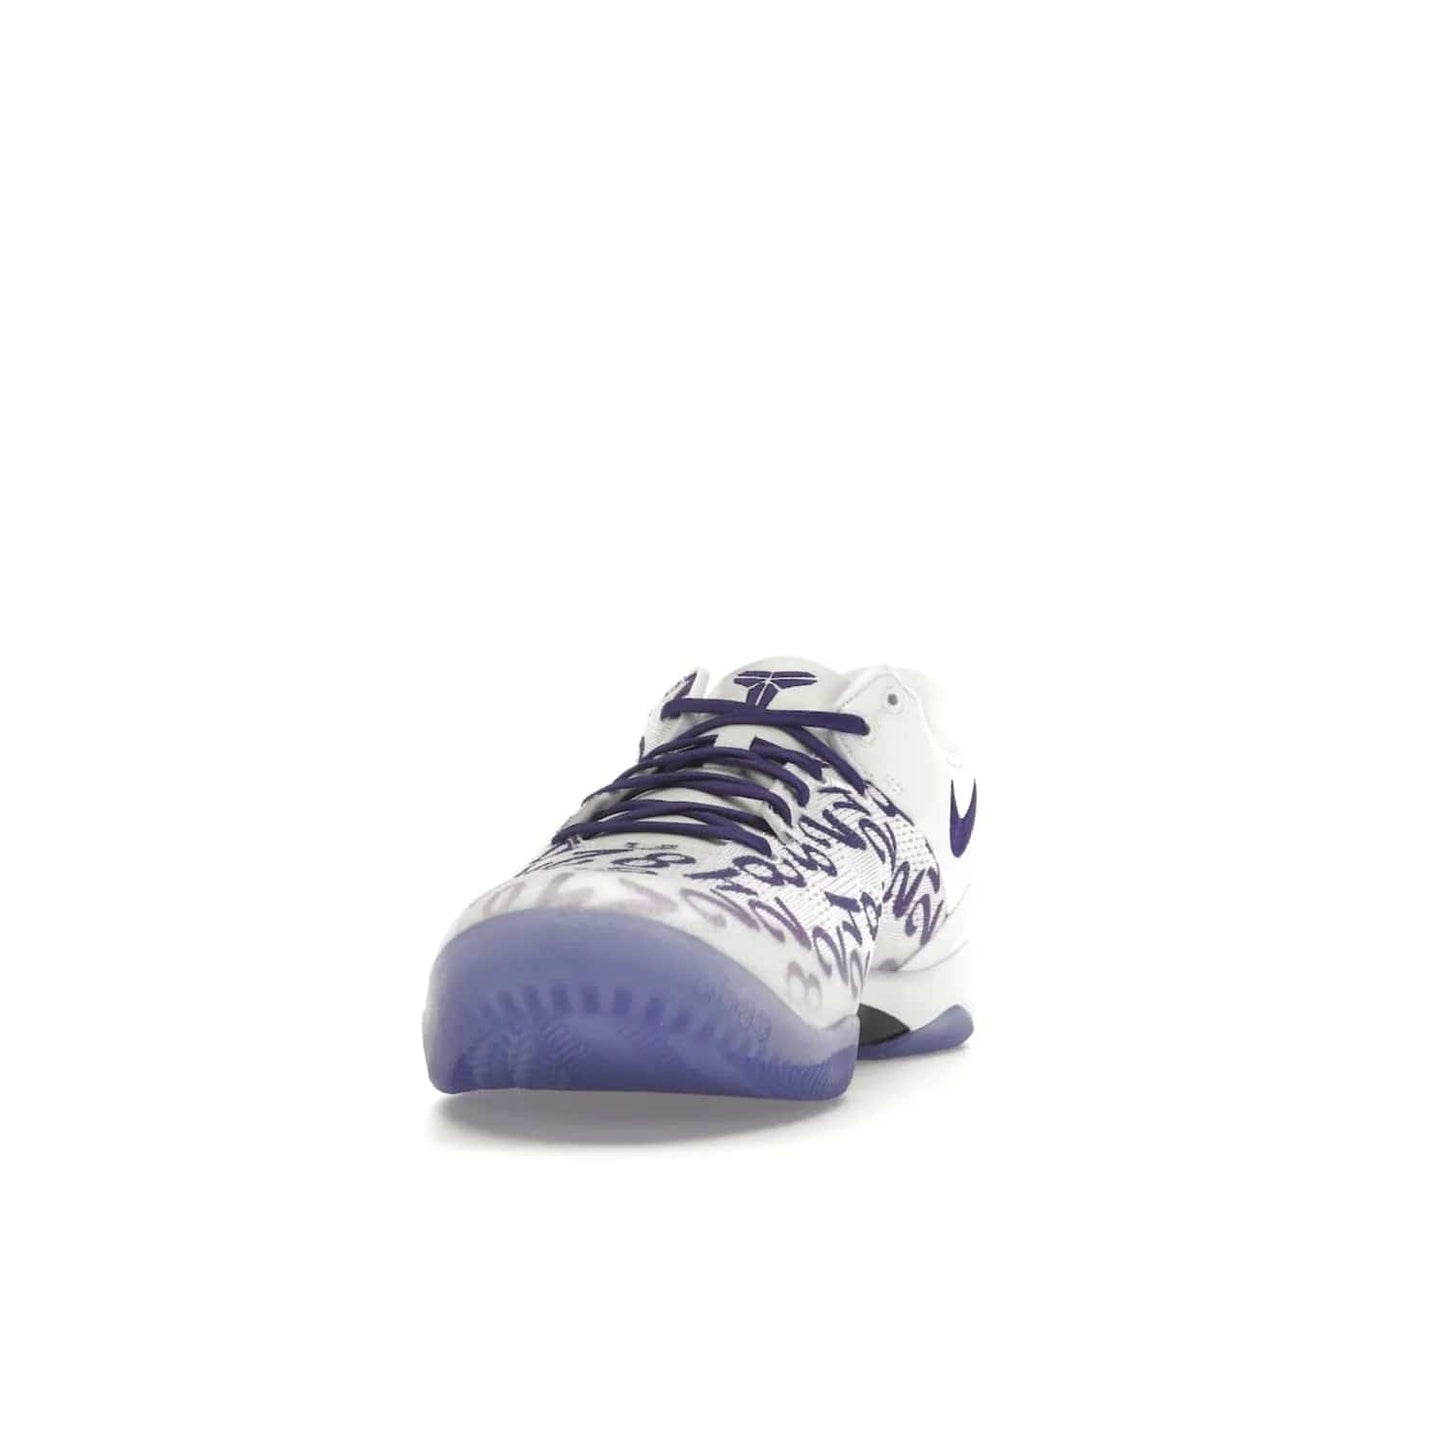 Nike Kobe 8 Protro Court Purple - Image 12 - Only at www.BallersClubKickz.com - 